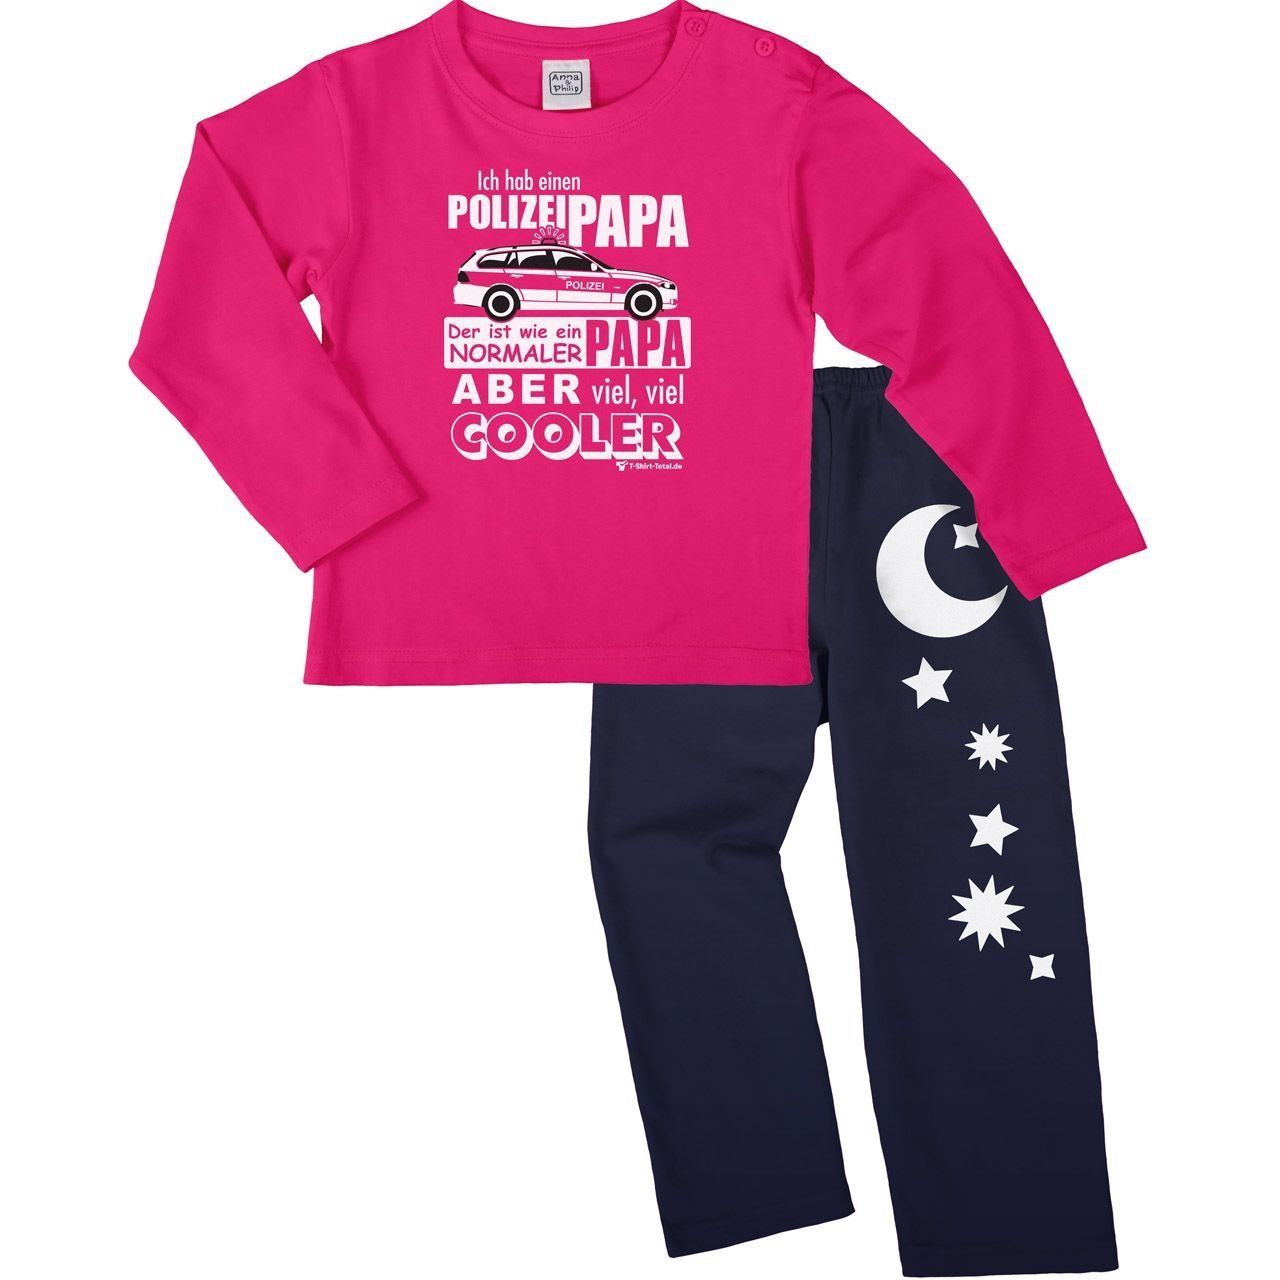 Polizei Papa Pyjama Set pink / navy 110 / 116